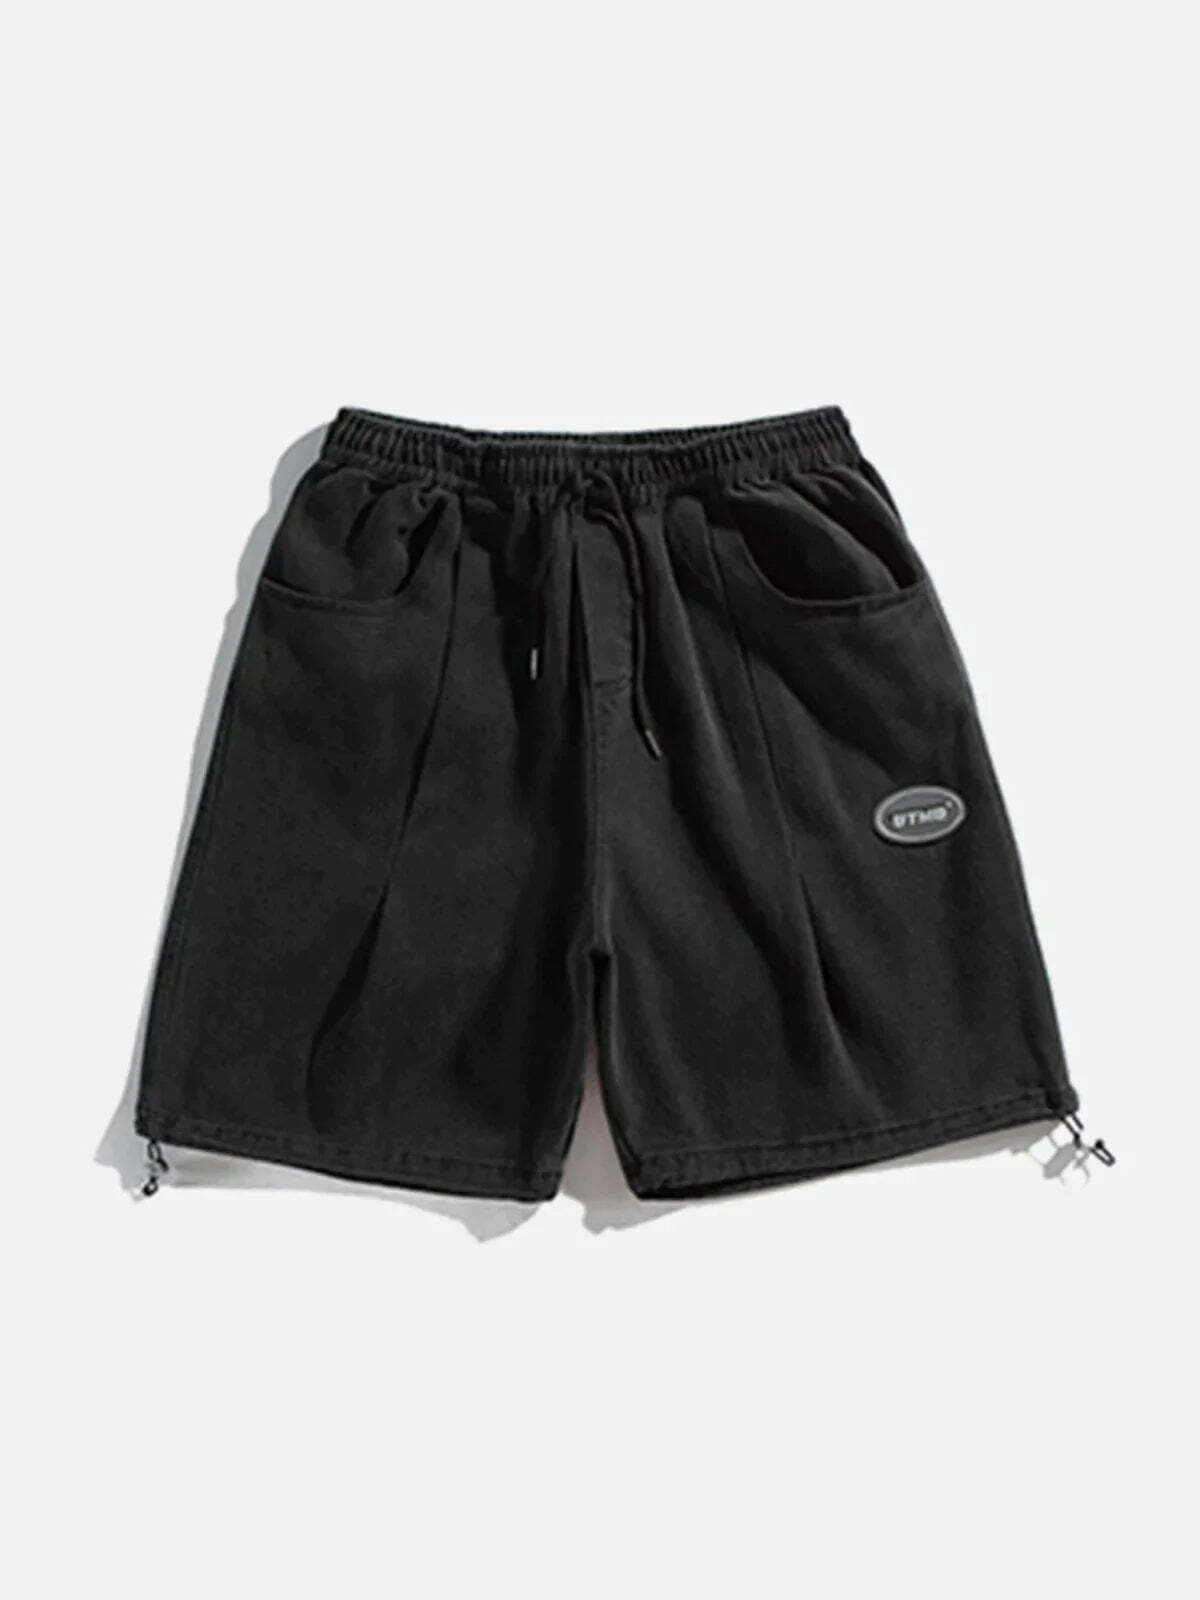 drawstring label shorts edgy urban streetwear 6186